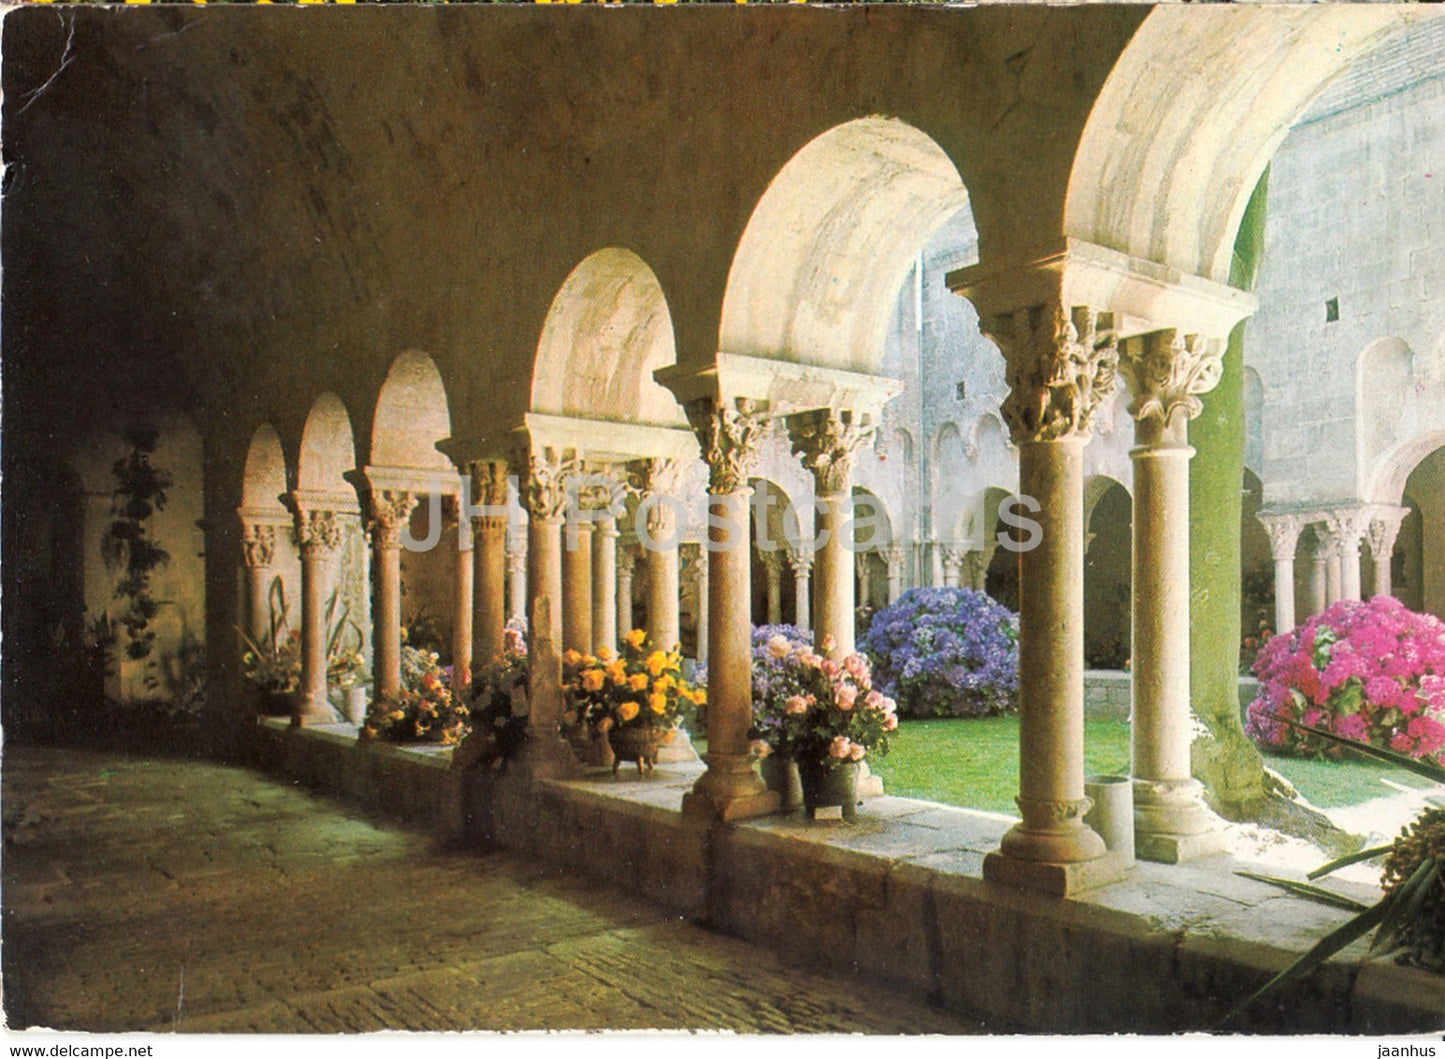 Gerona - Claustros Romanicos Siglo XII - Romanesque Cloister - 9 - Spain - unused - JH Postcards